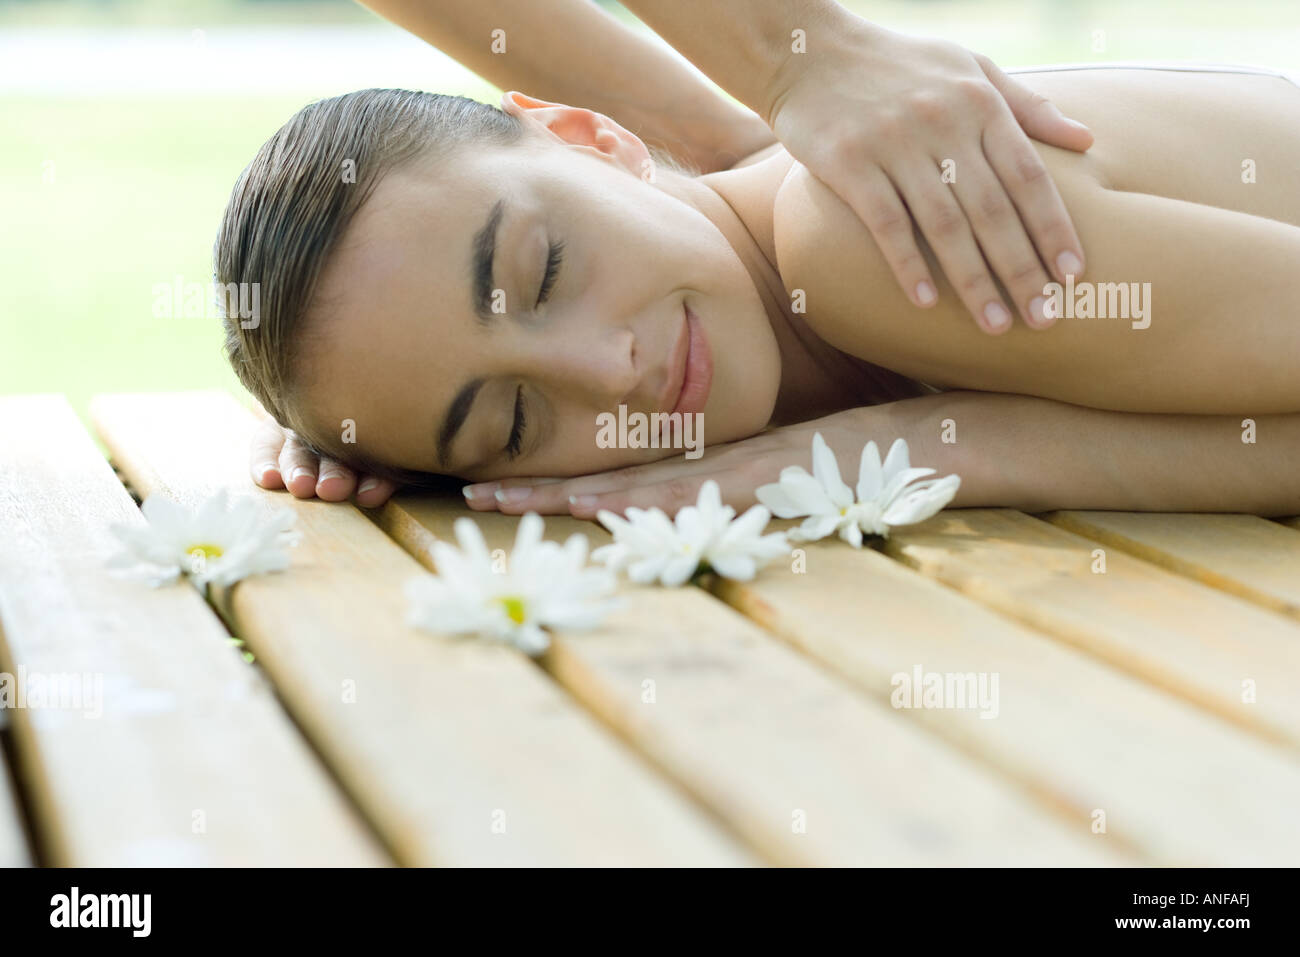 Woman receiving back massage Stock Photo